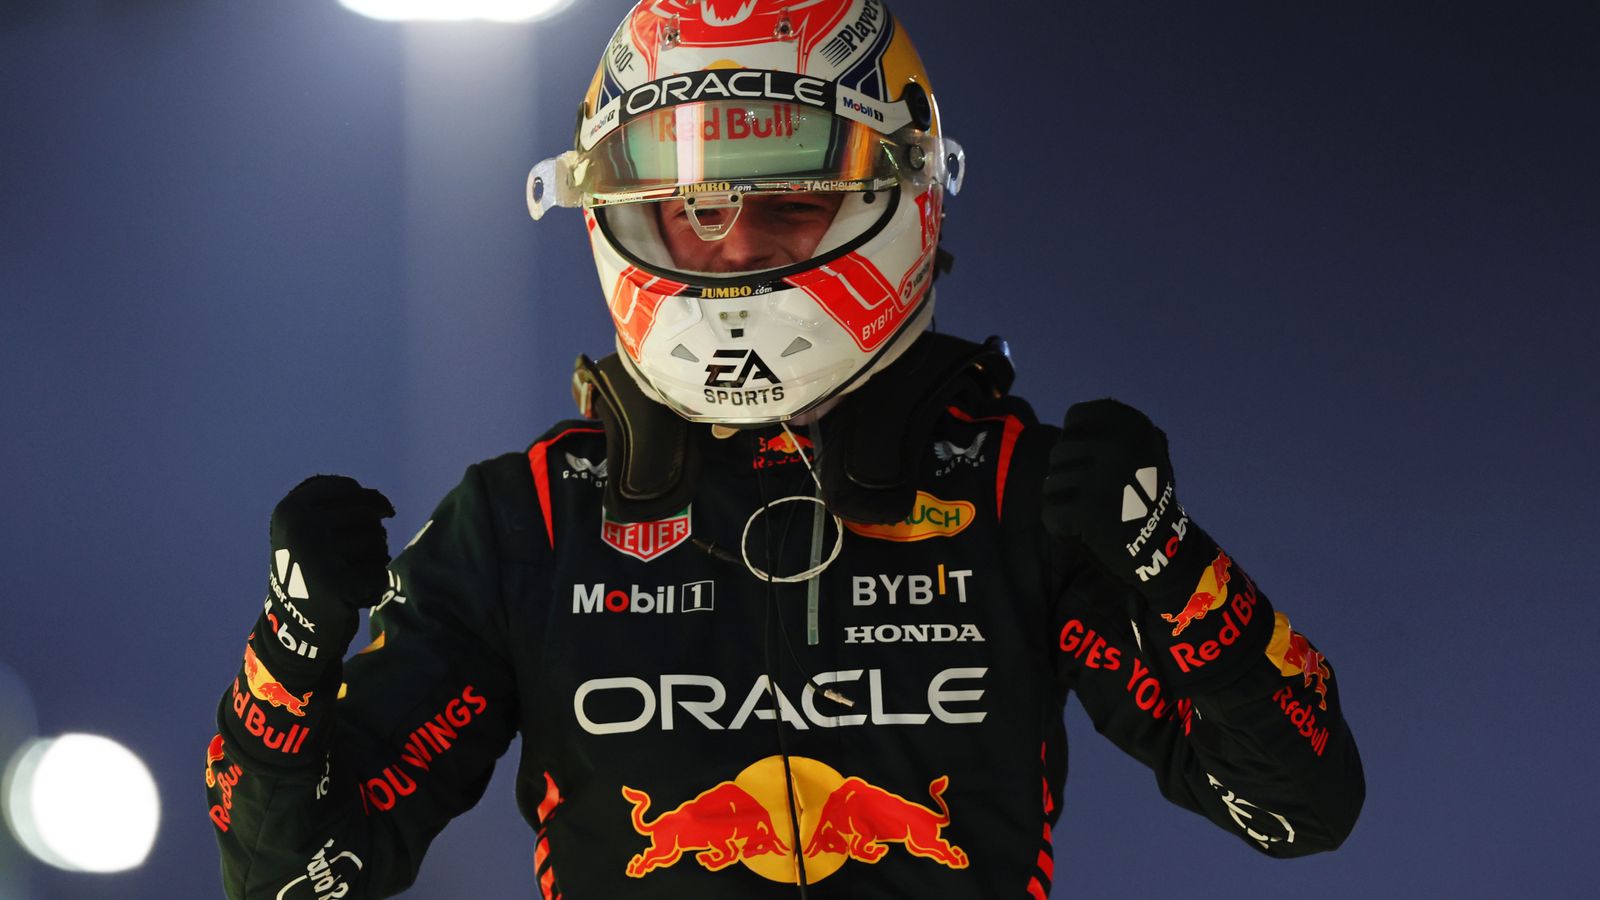 2012 Bahrain Grand Prix: F1 Race Results, Winner & Podium